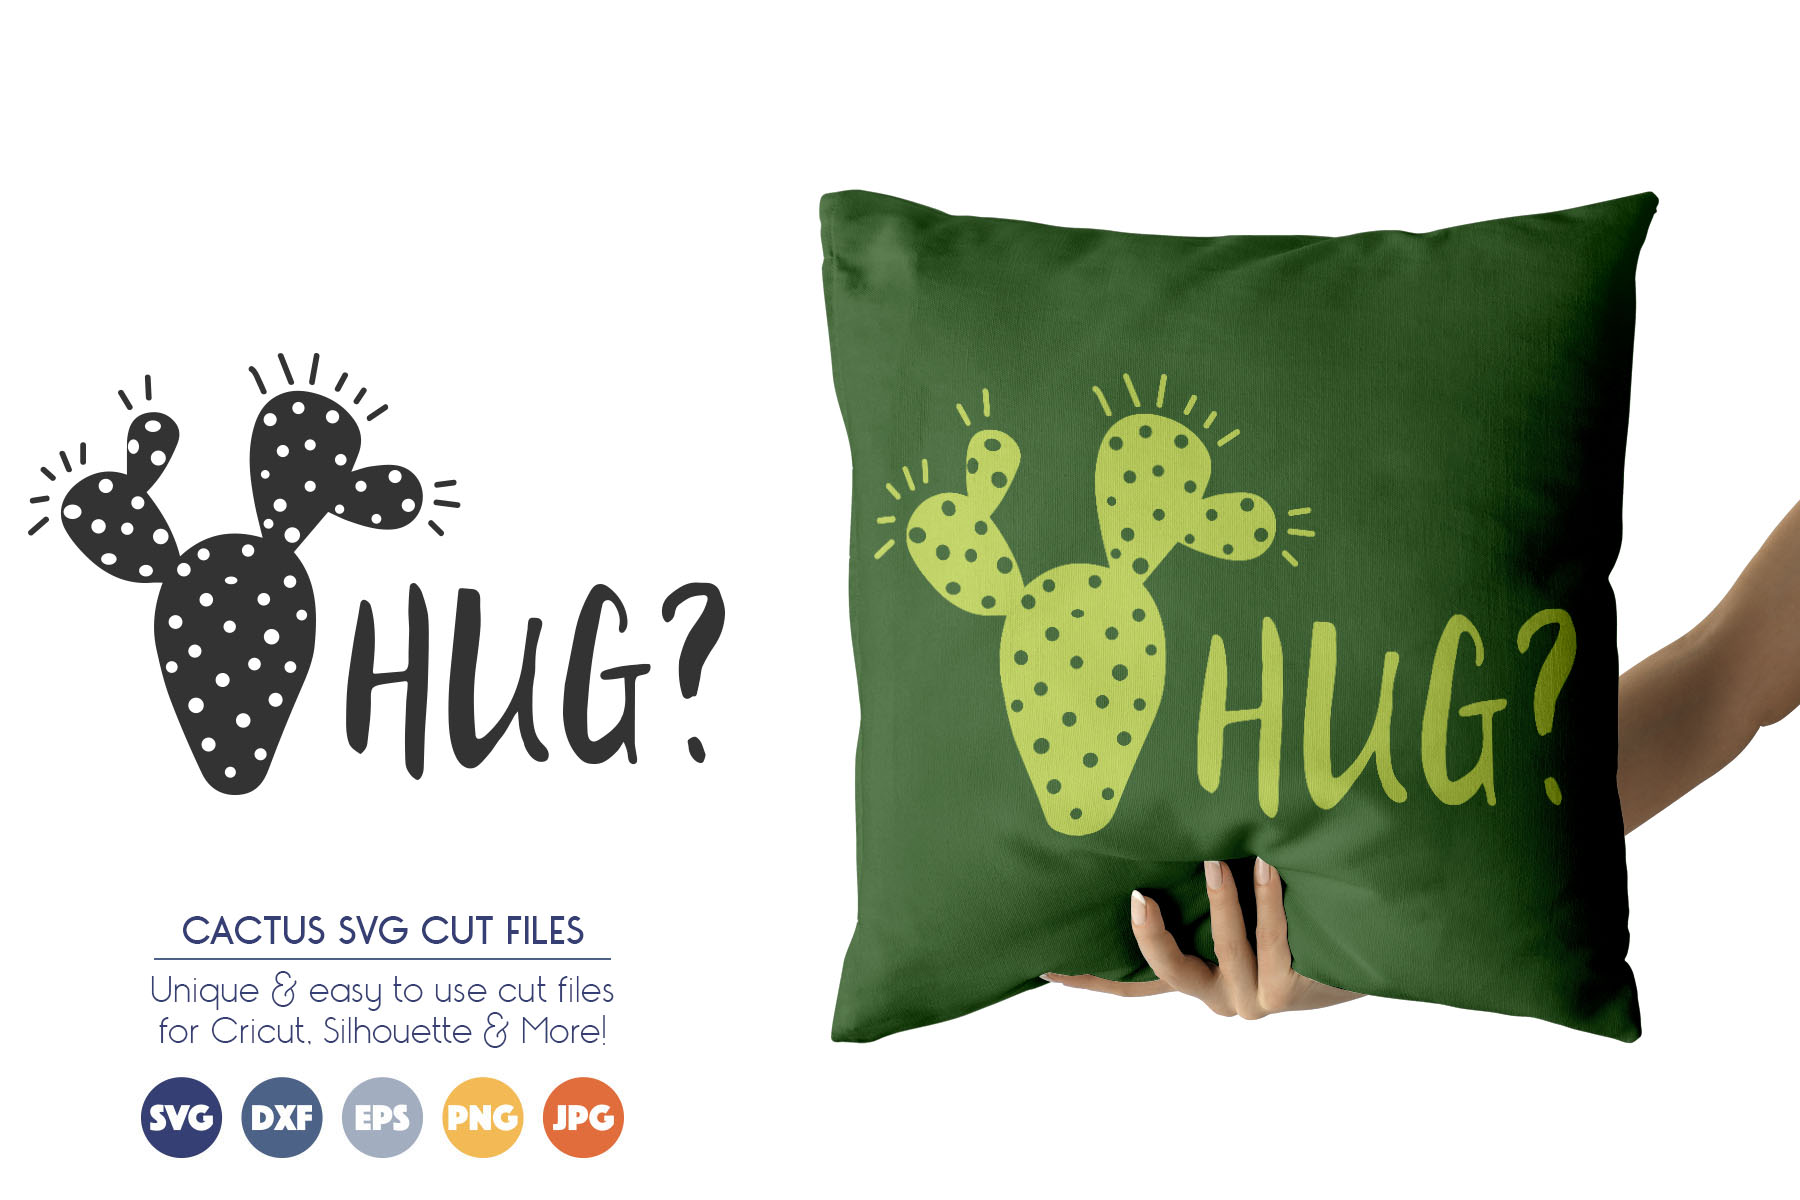 Download Cactus SVG Cut Files - Free Hugs